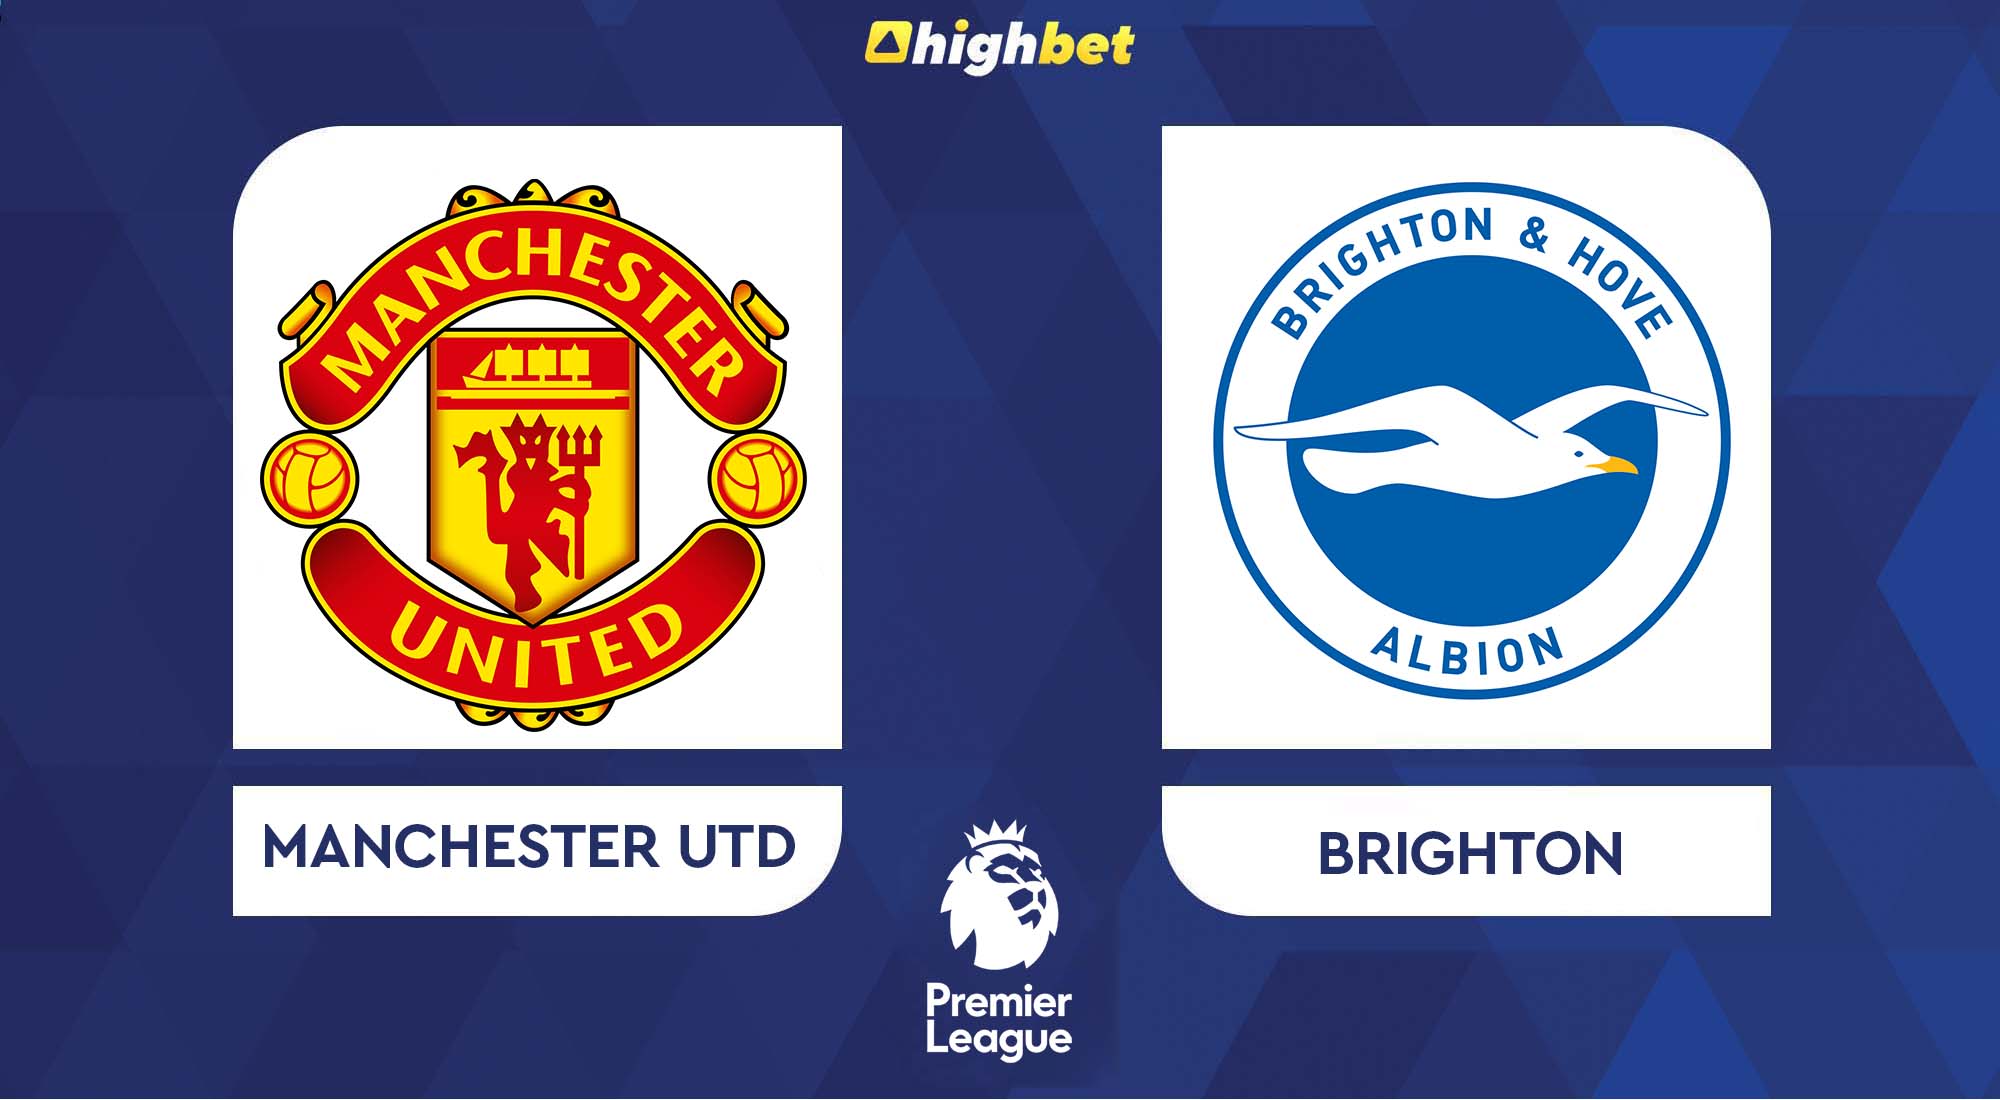 Manchester Utd vs Brighton - highbet Premier League Pre-Match Analysis